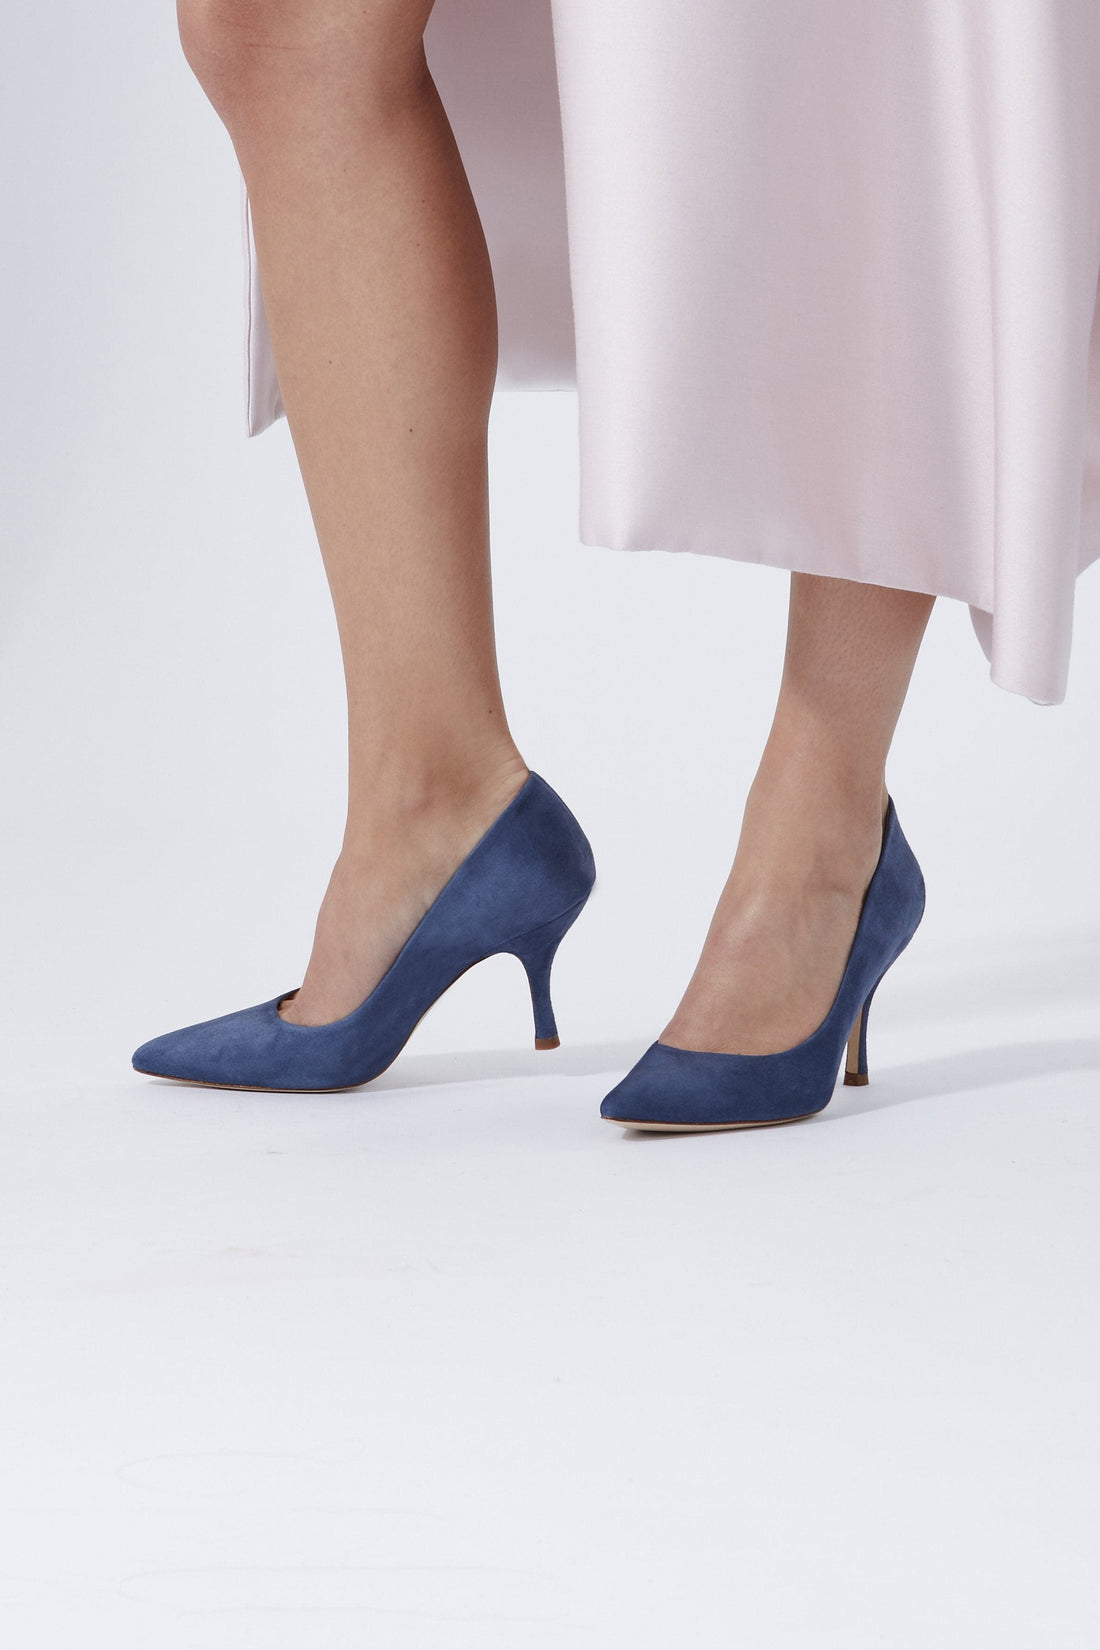 Olivia Riviera Fashion Shoe Blue-Grey Suede Pointed Court